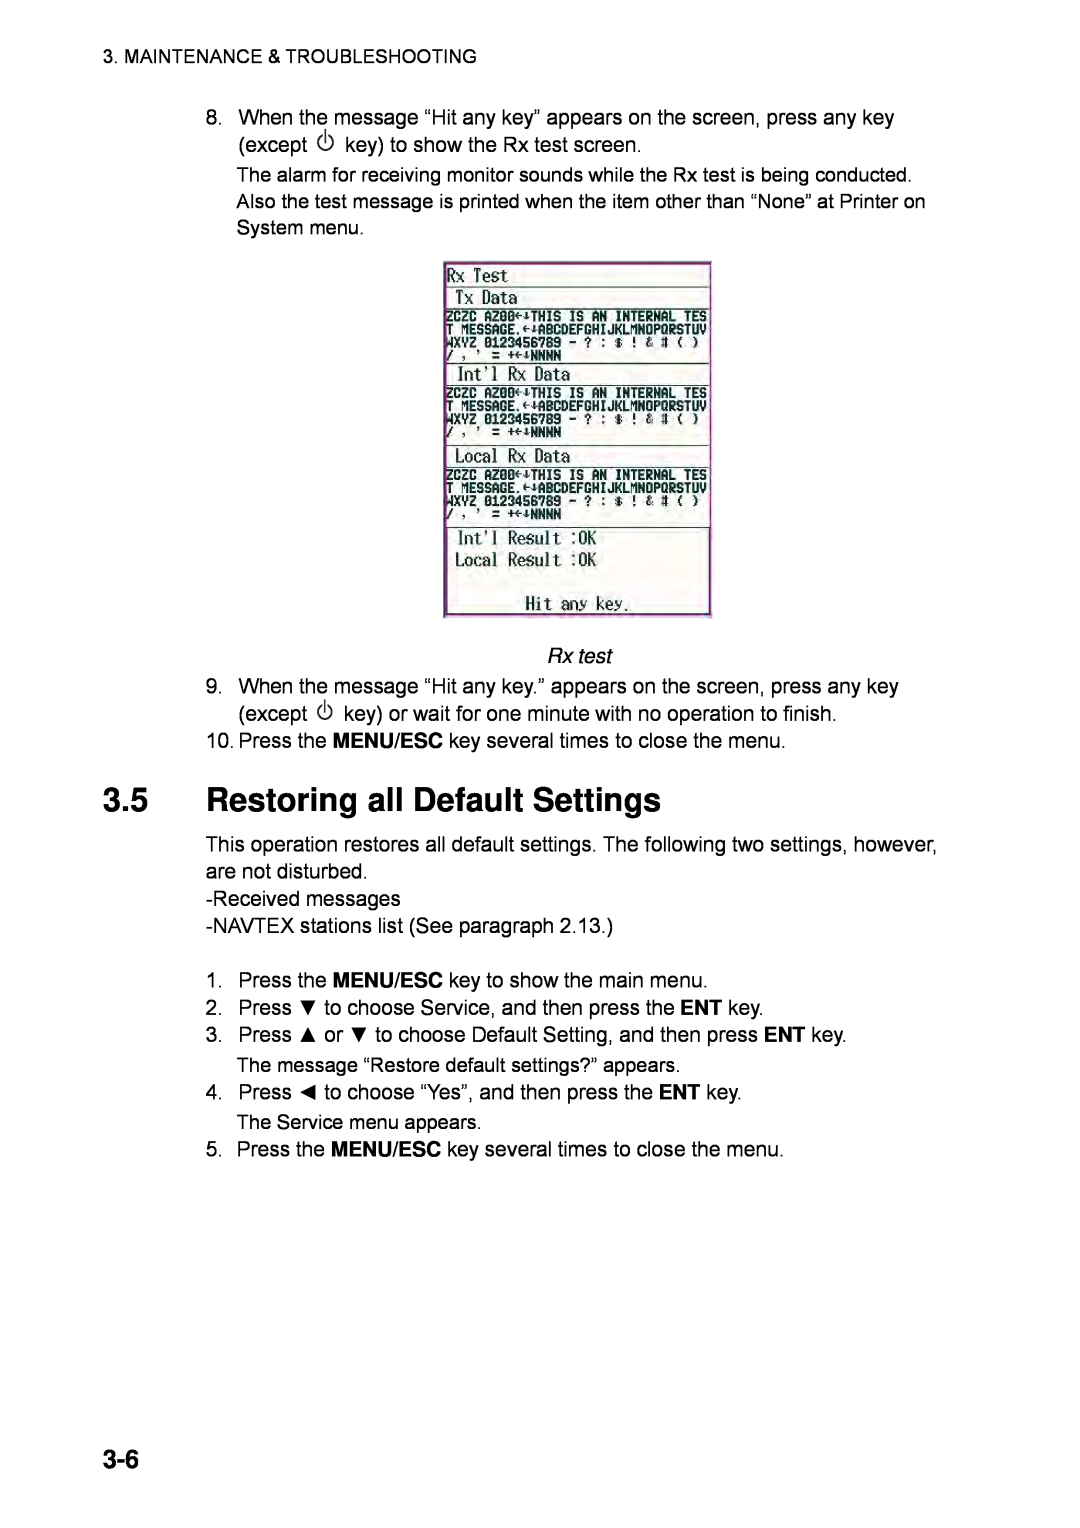 Furuno NX-700B manual 3.5Restoring all Default Settings, Rx test 